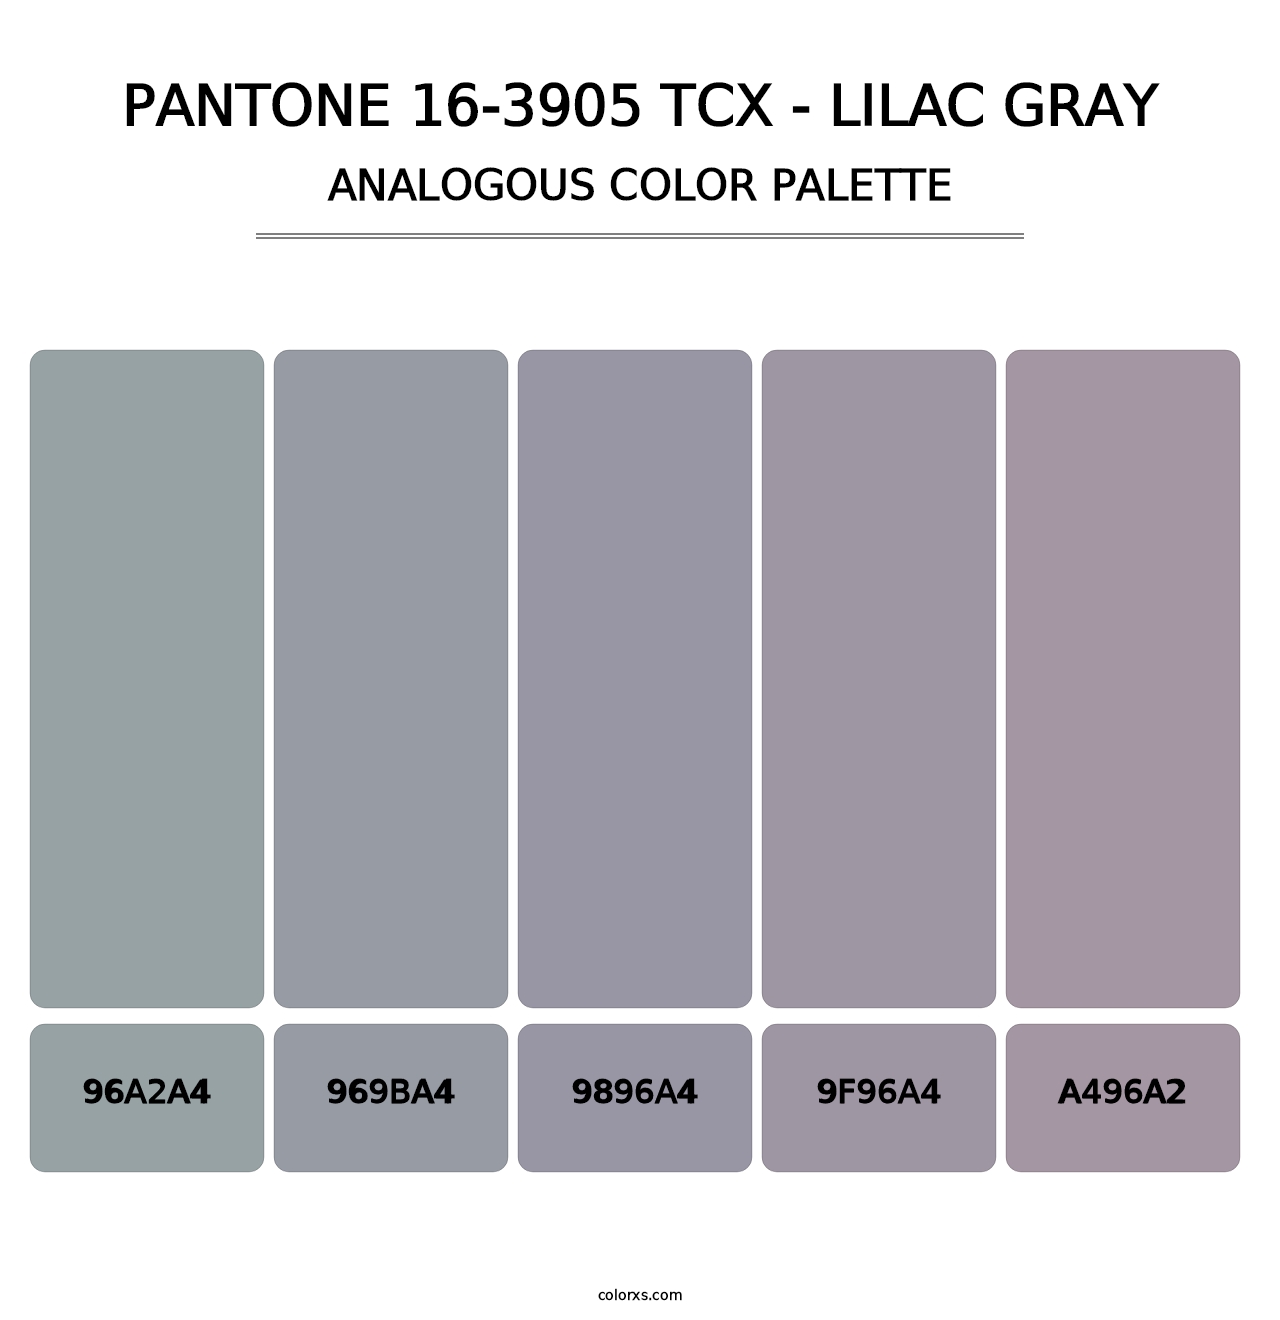 PANTONE 16-3905 TCX - Lilac Gray - Analogous Color Palette